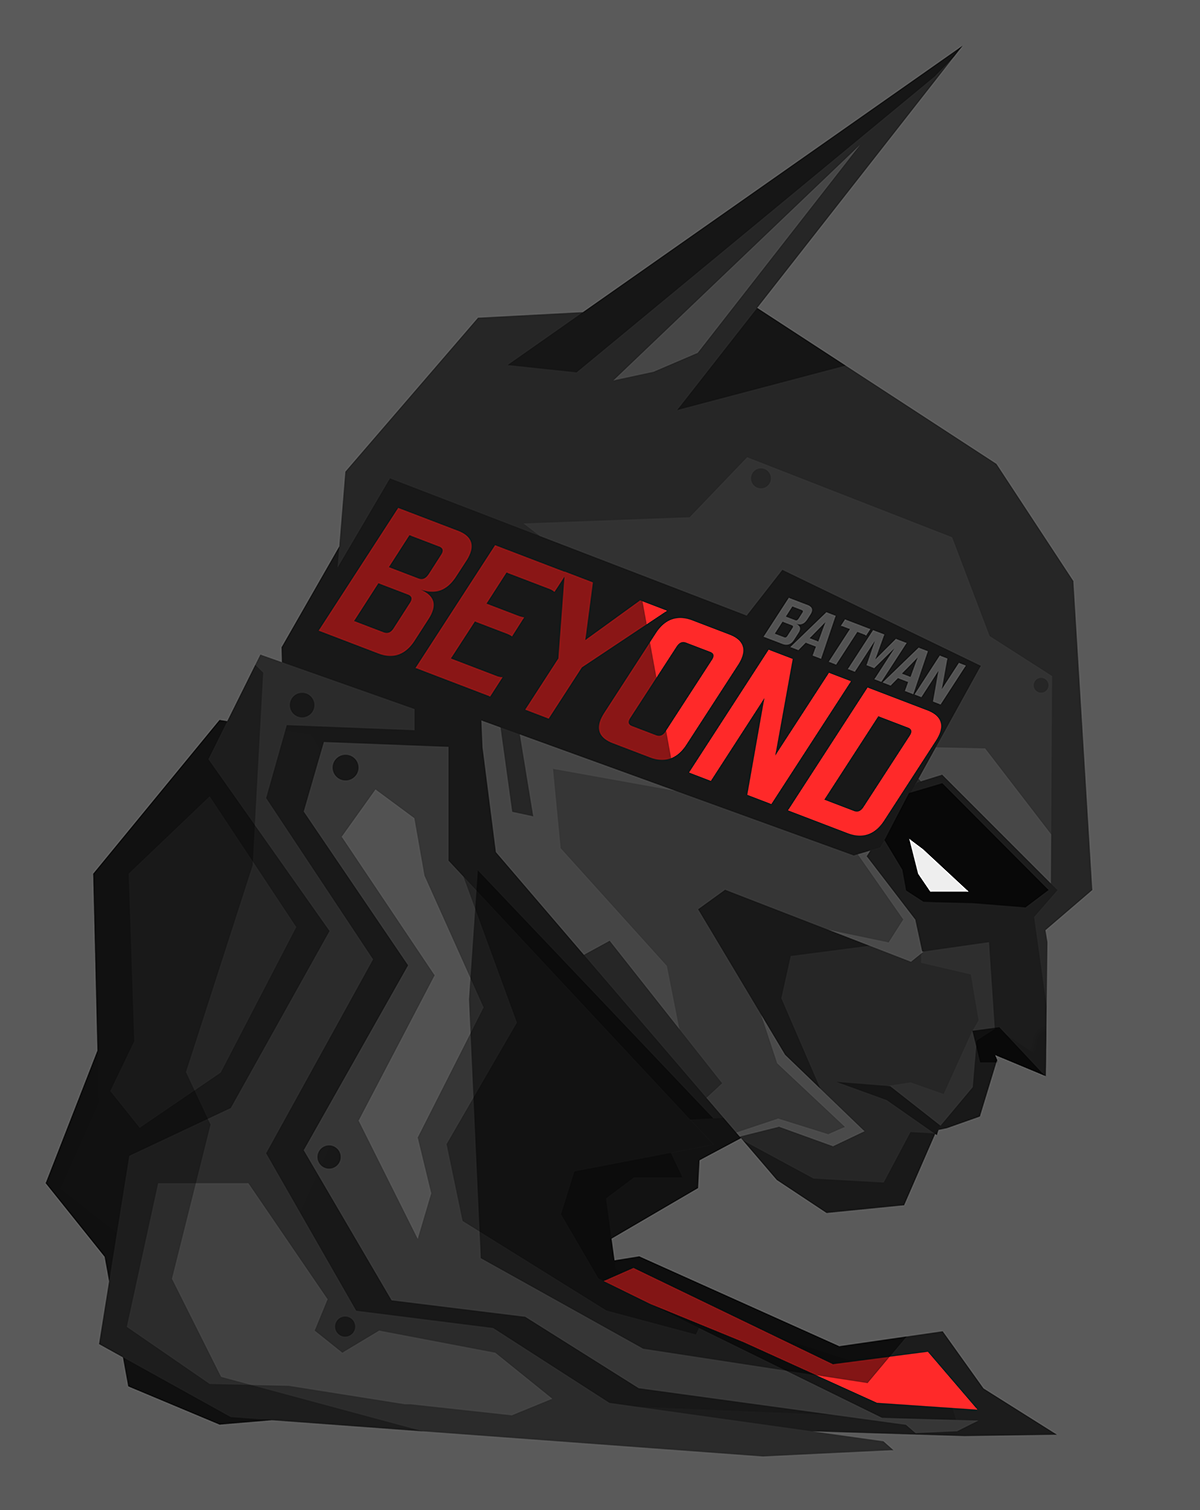 General 1200x1510 Batman Beyond Bosslogic Batman superhero profile gray background